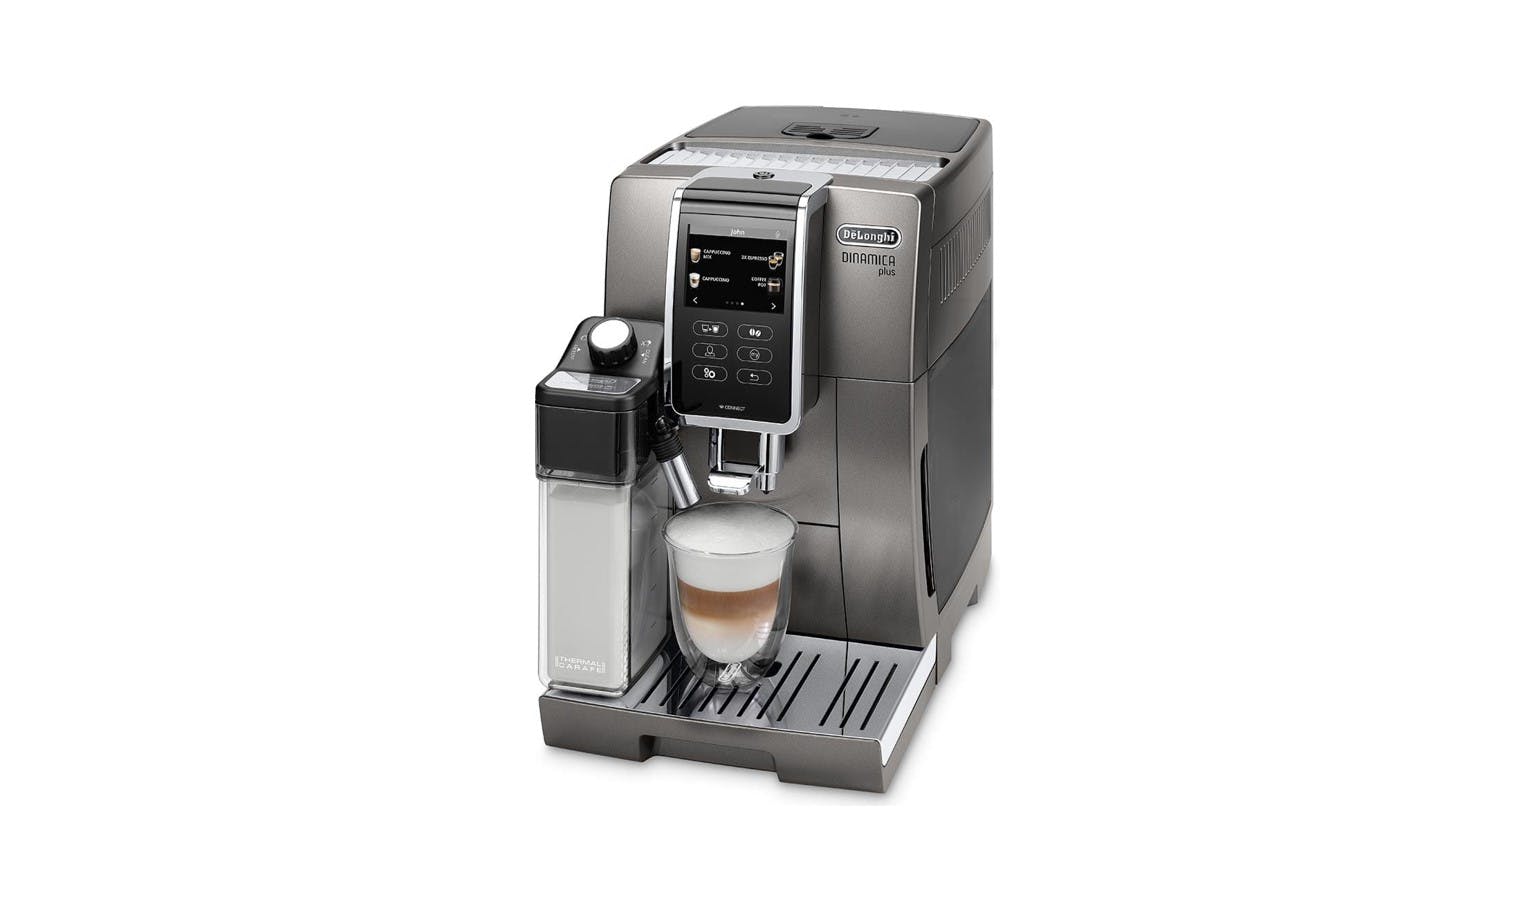 DeLonghi Dinamica Plus Review  Smart Coffee Machine? 